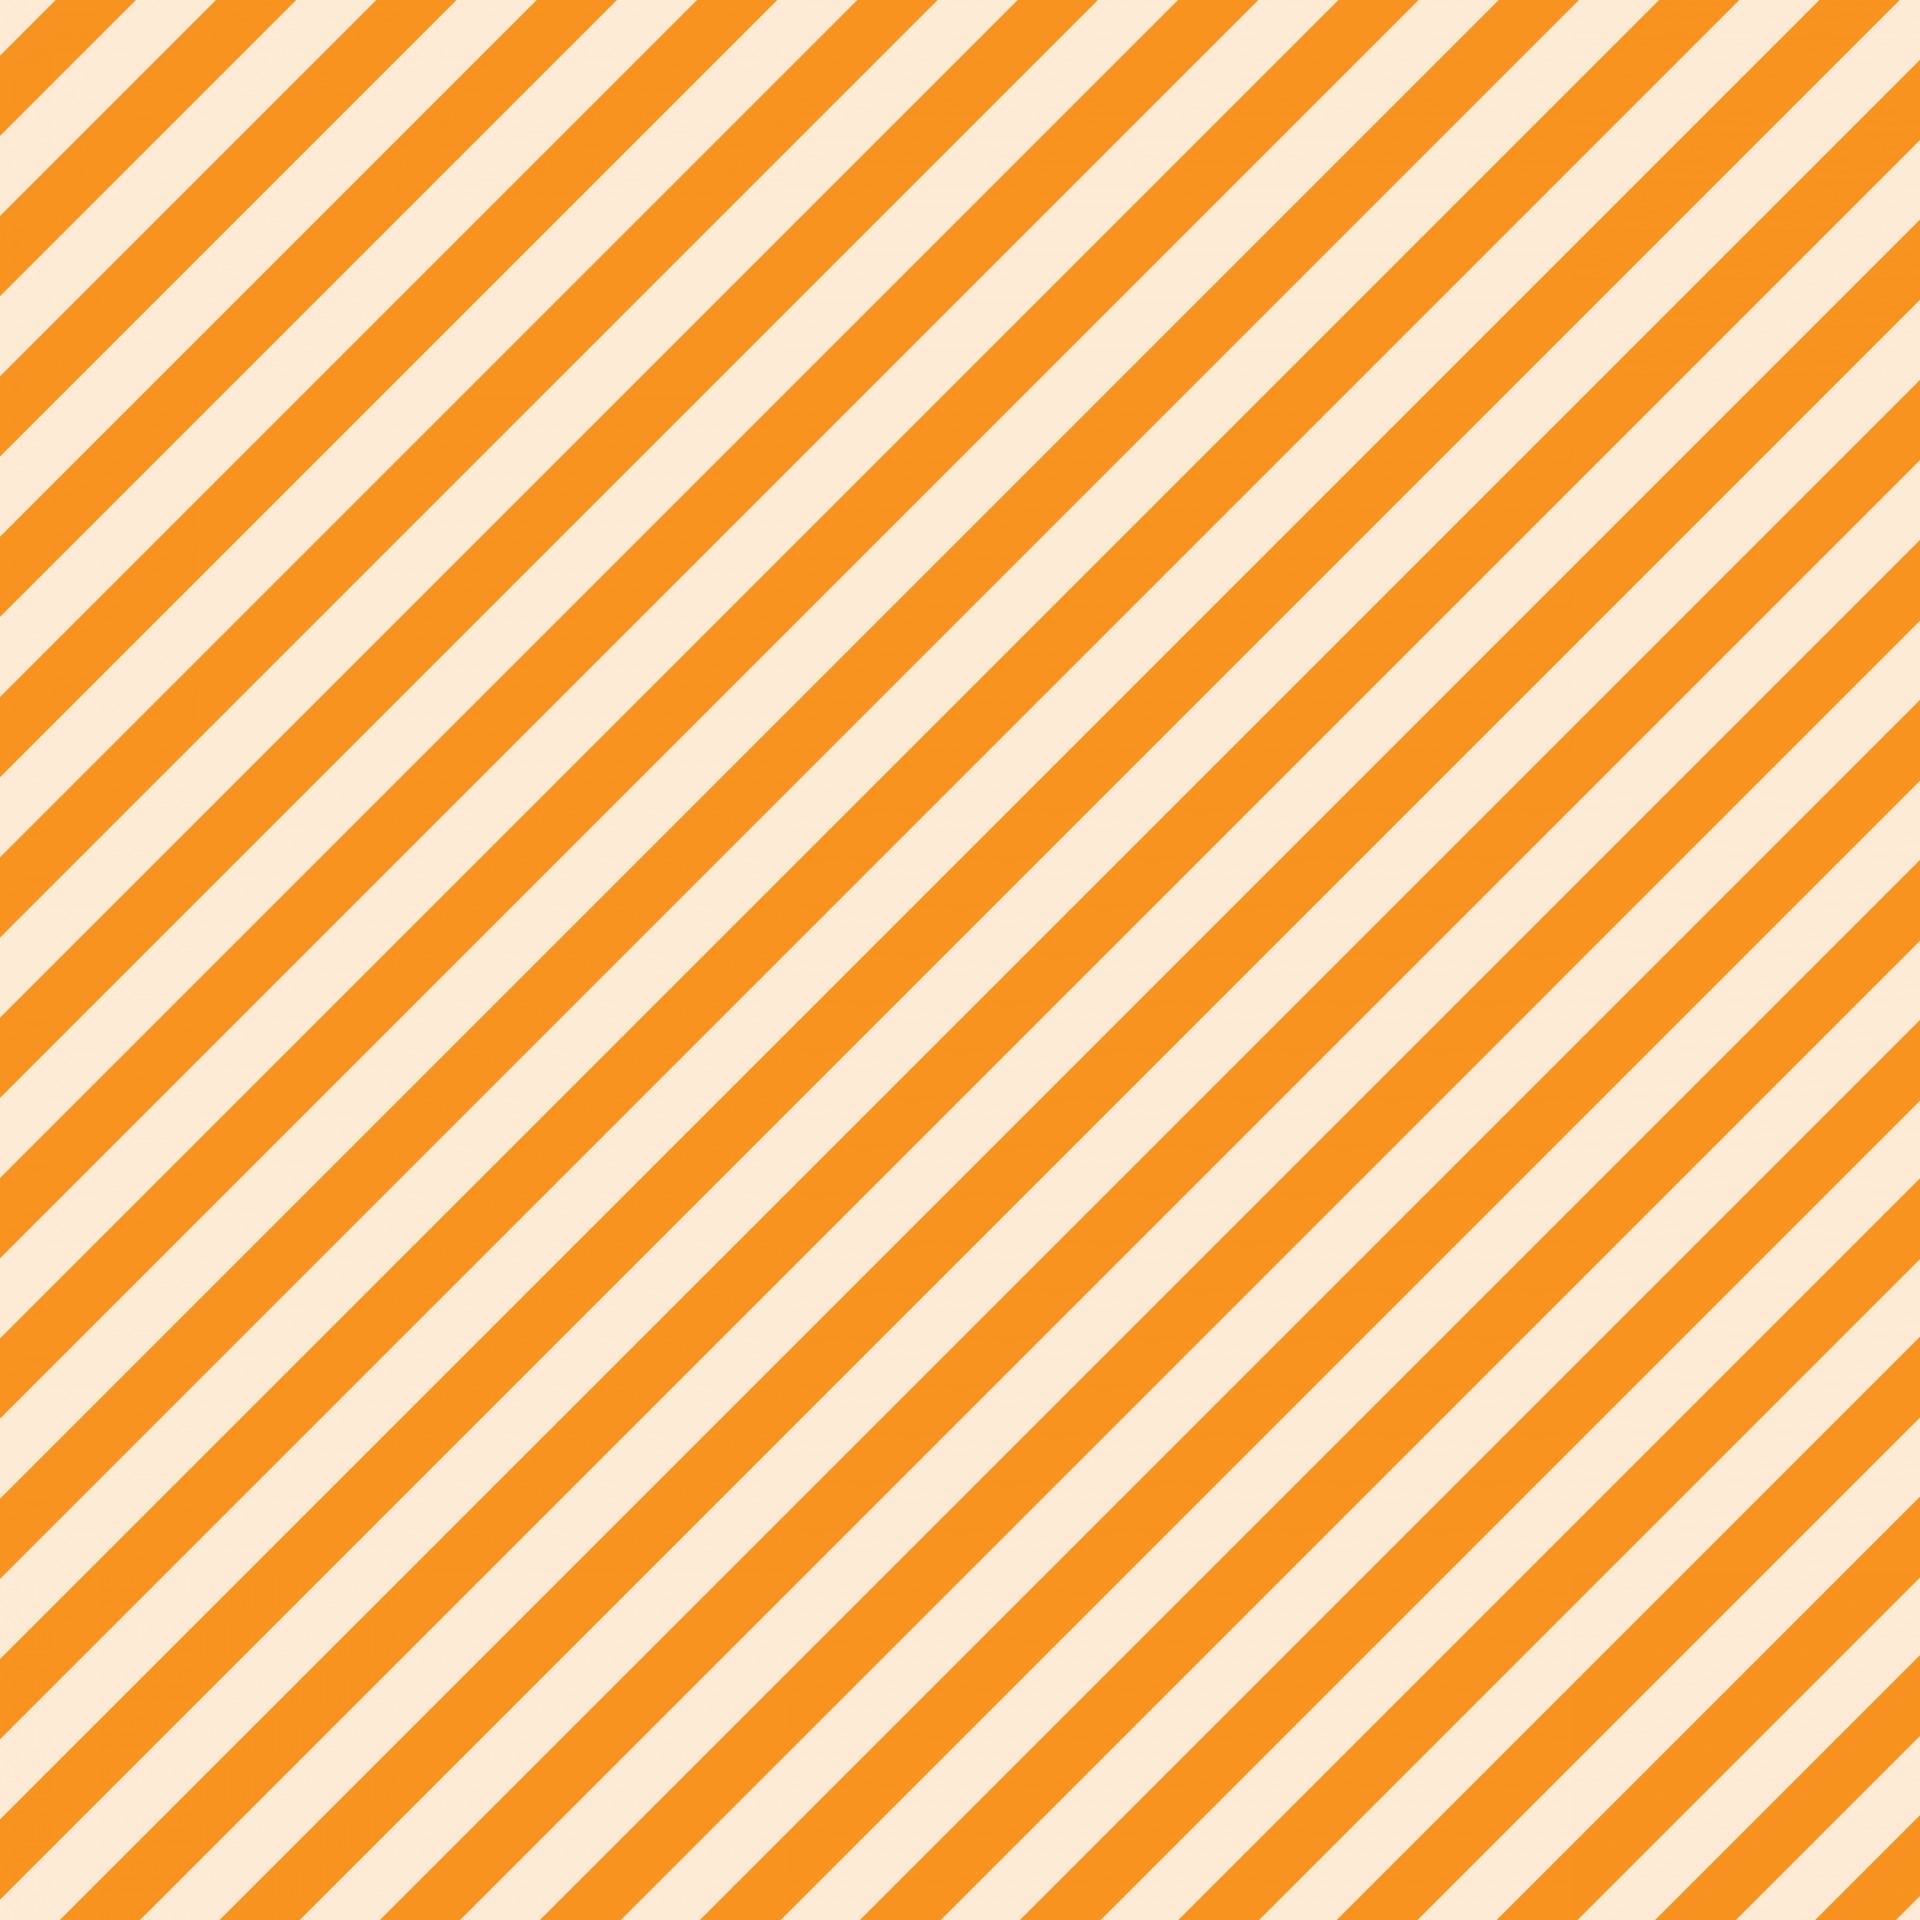 Stripes,striped,stripe,yellow,diagonal - free image from